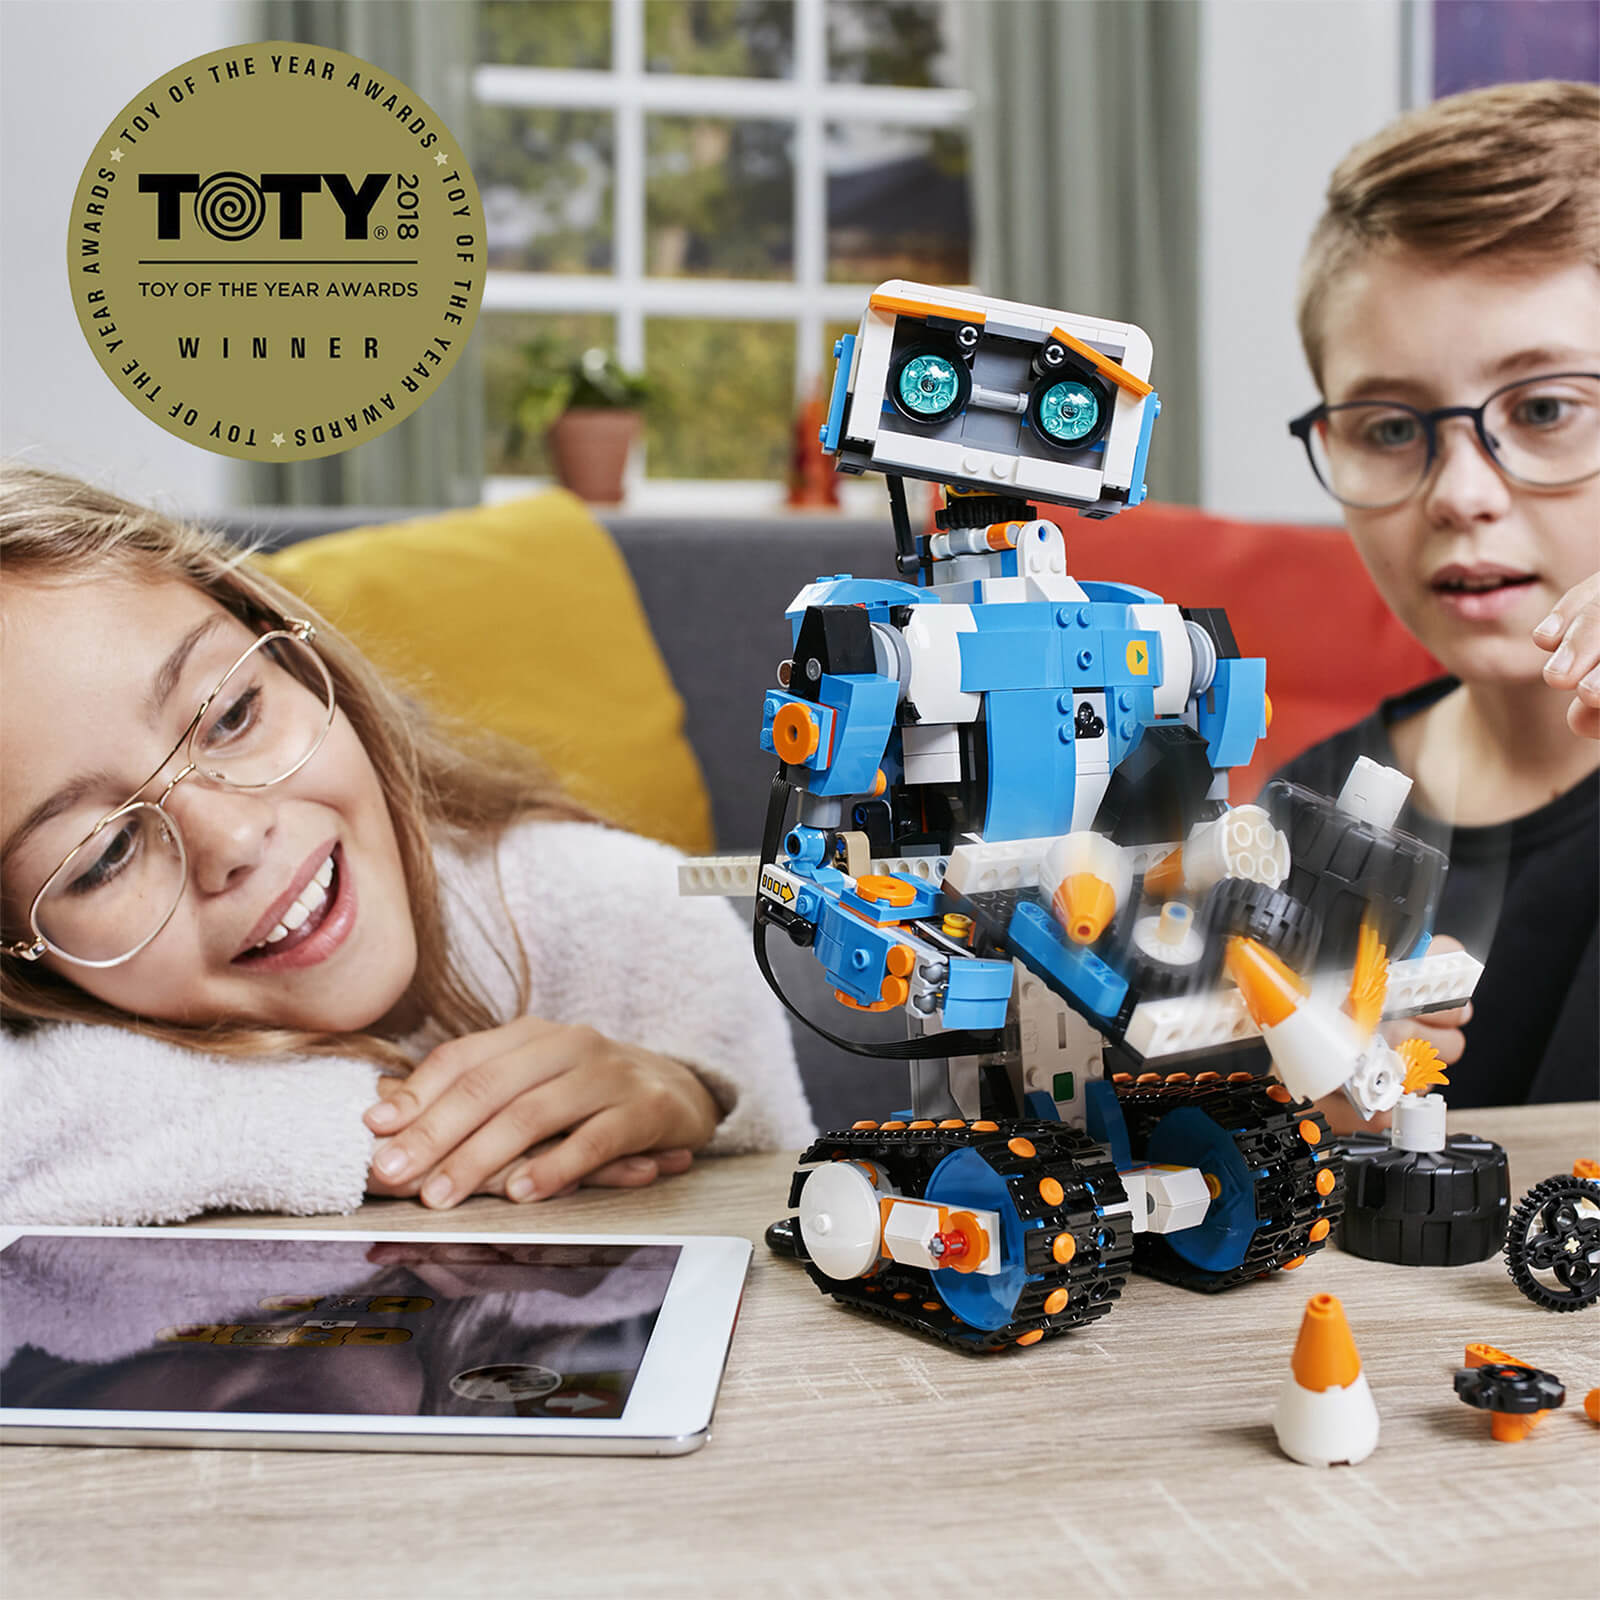 LEGO Boost Programmierbares Roboticset (17101) 2